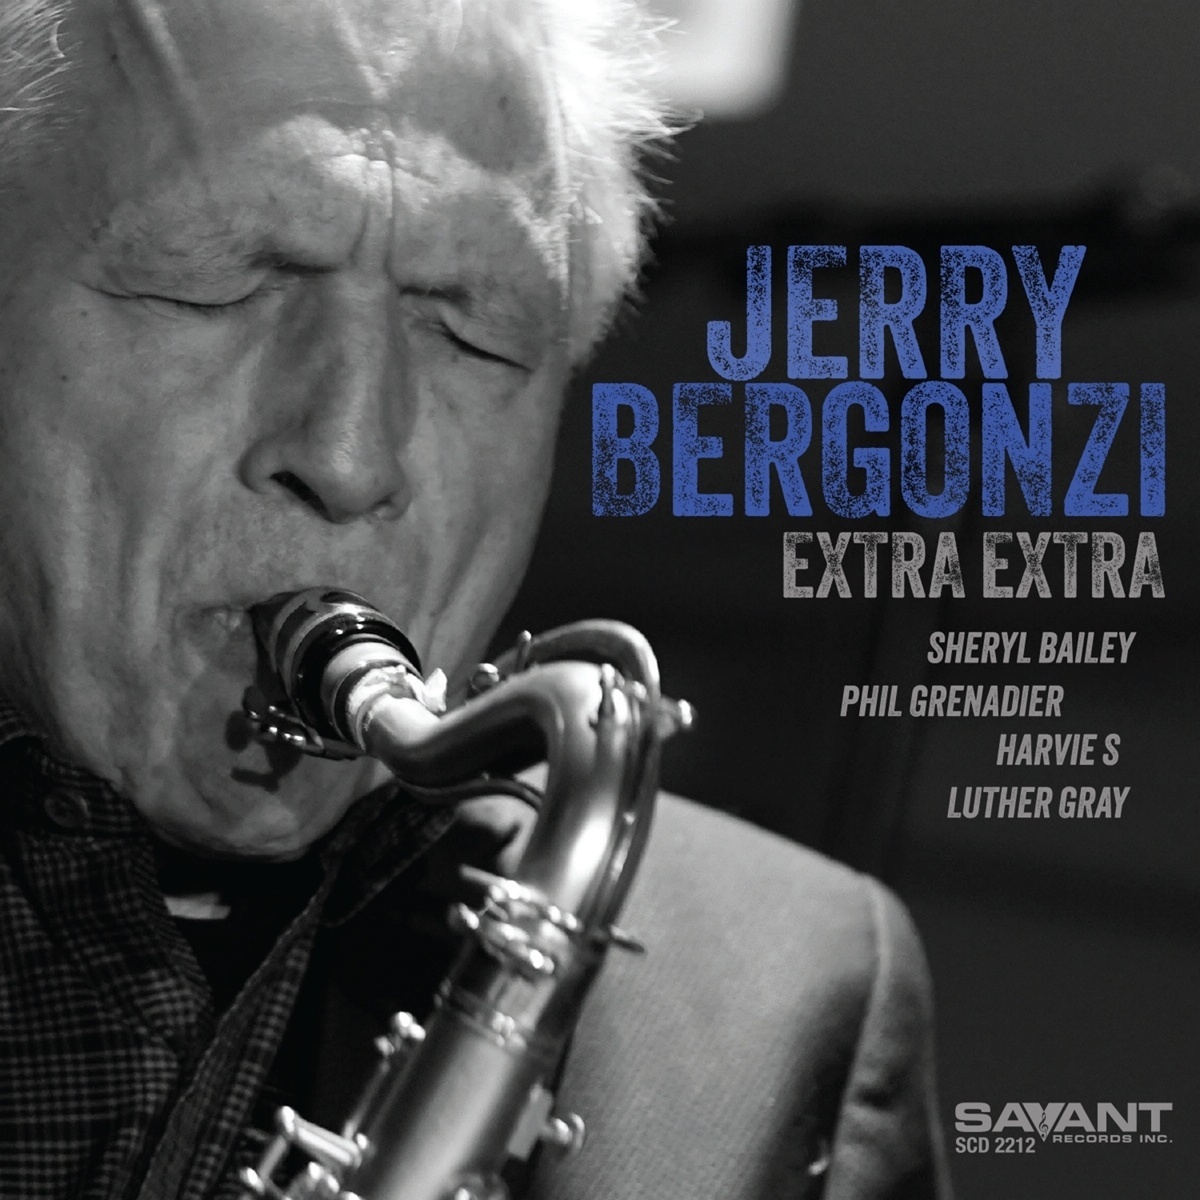 Extra Extra - Jerry Bergonzi. (CD)